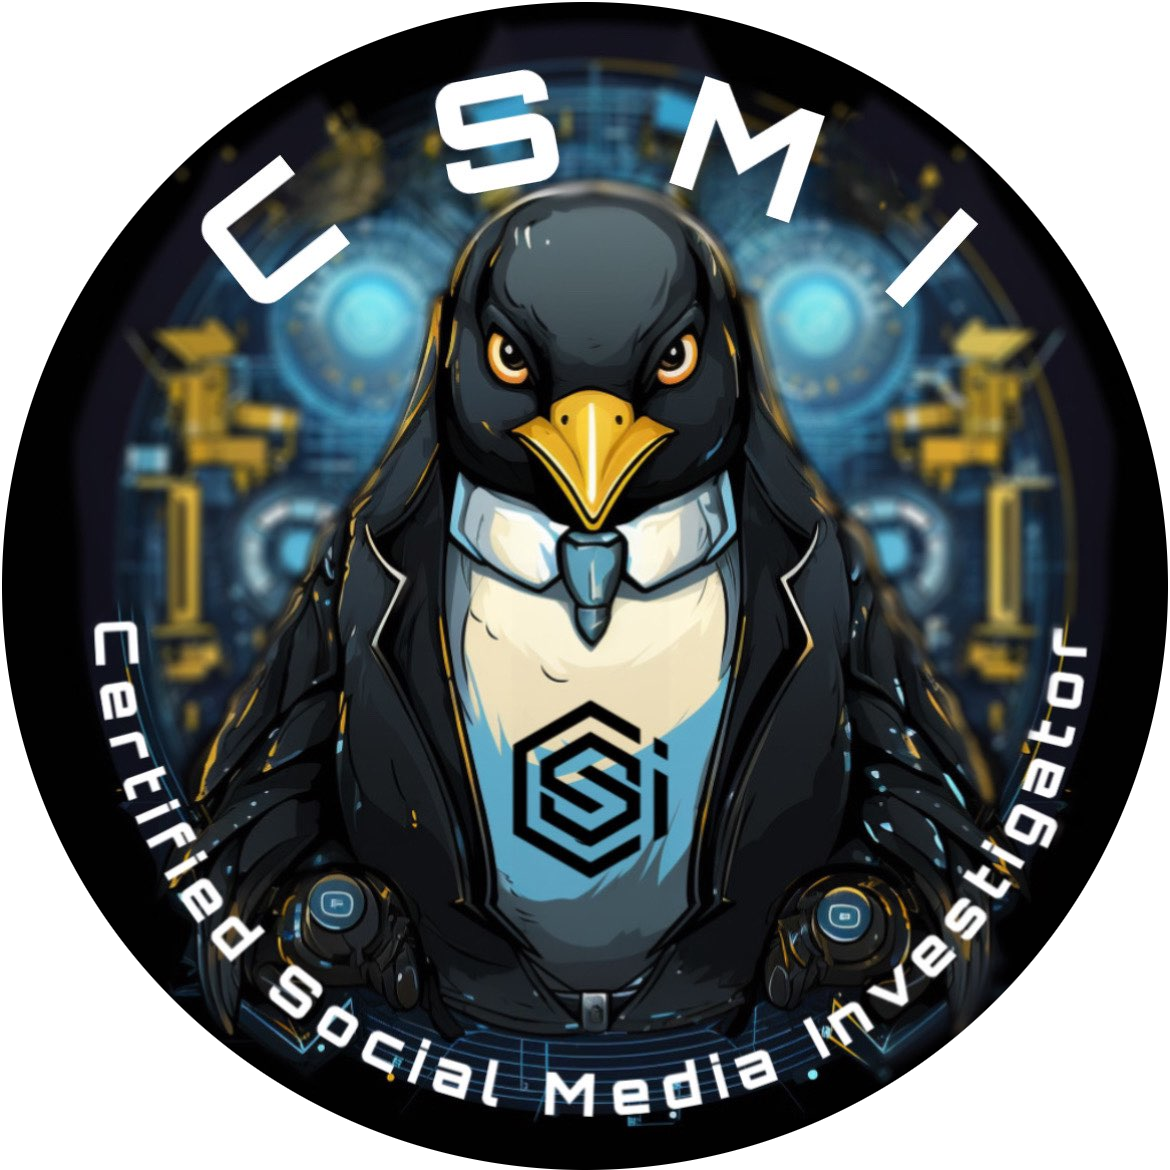 The CSI Linux Certified Social Media Investigator Badge